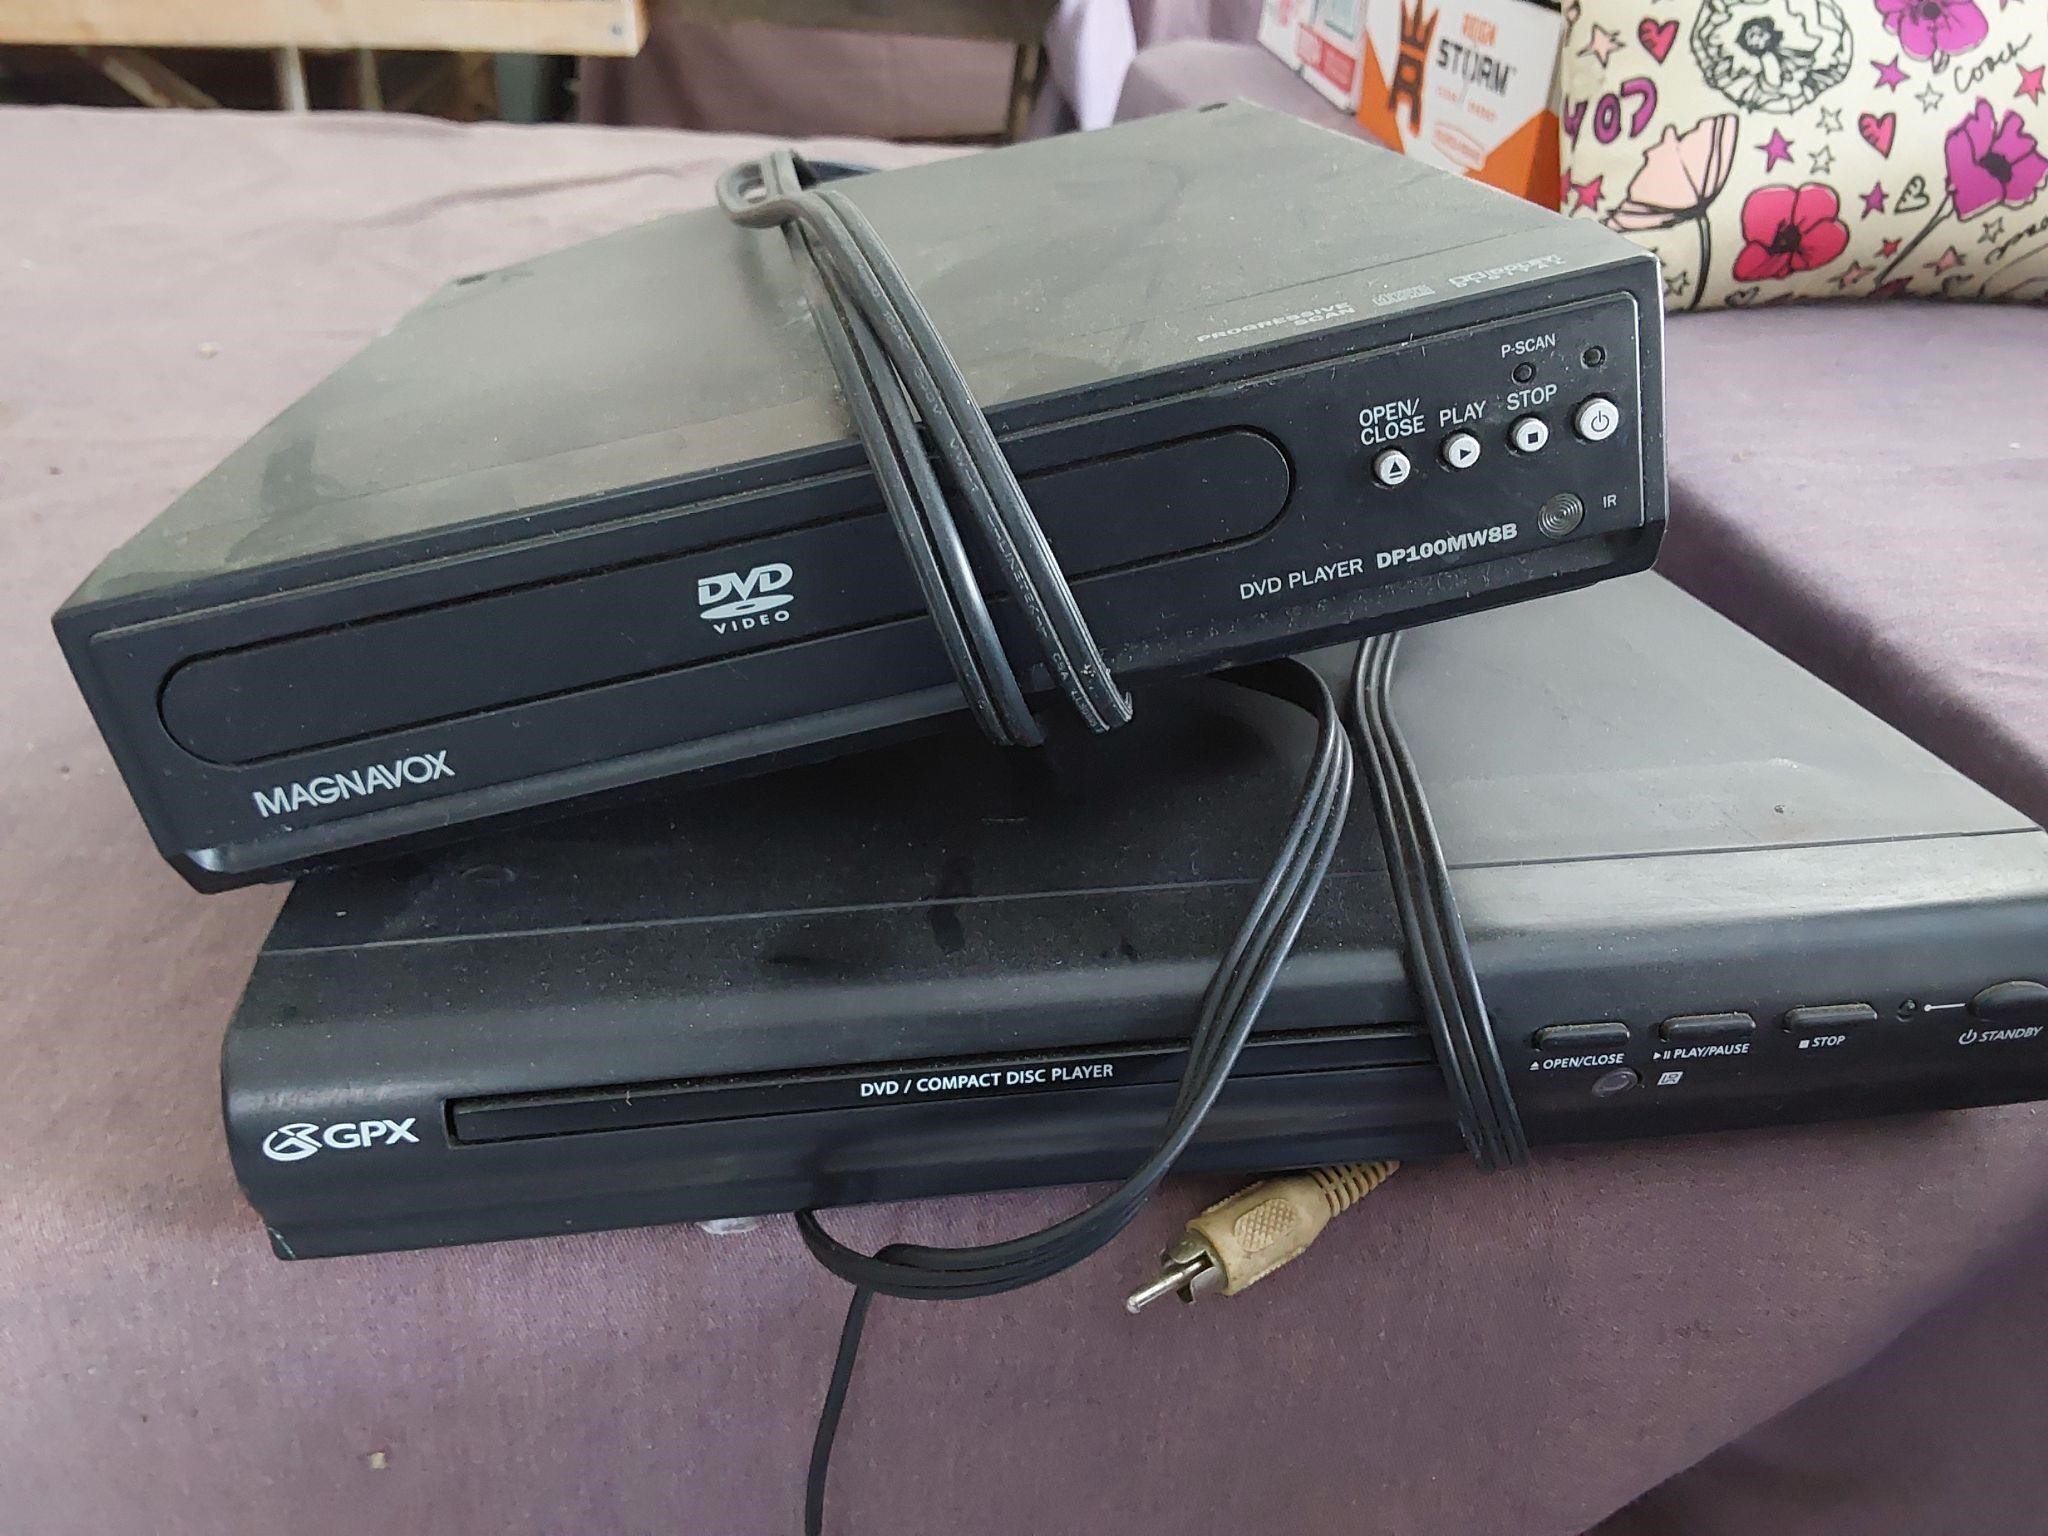 Magnavox & GPX DVD Players (no remotes)